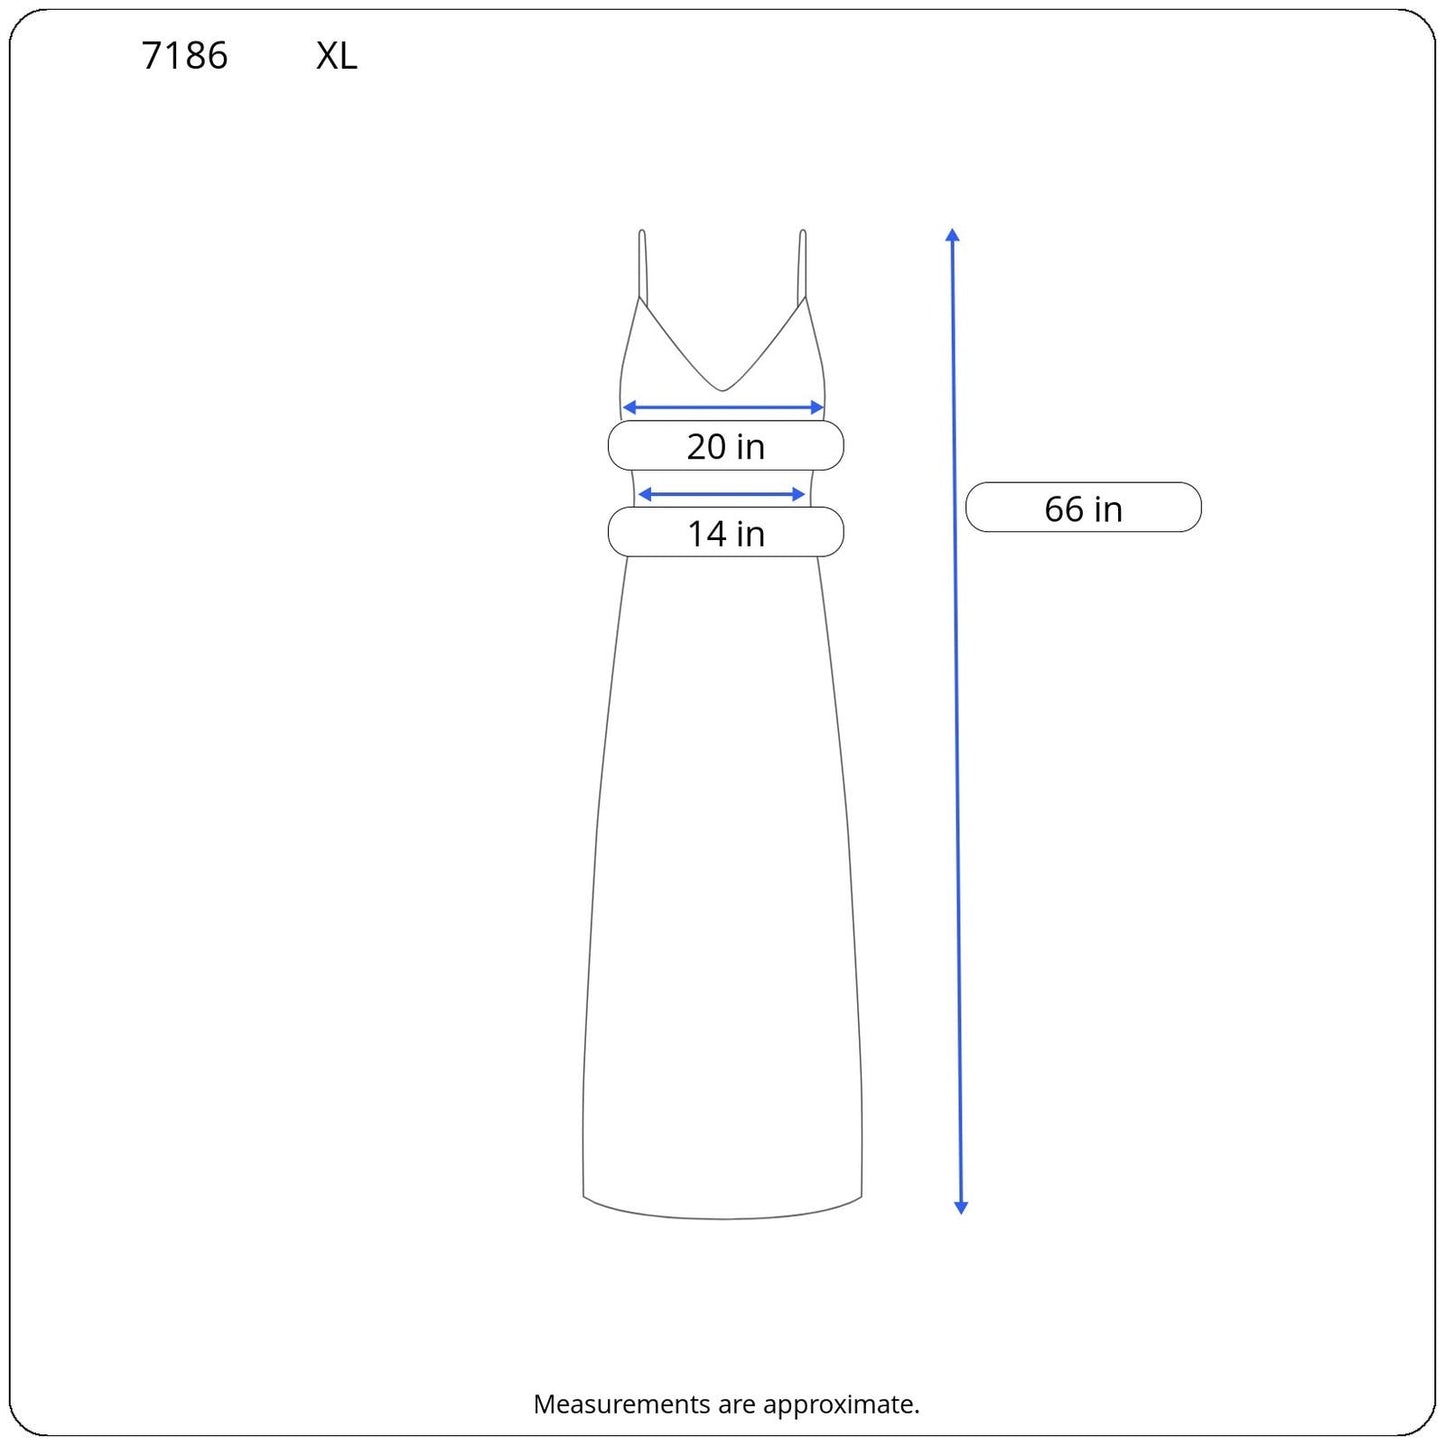 Show  Me Your Mumu Black Kendall Maxi Dress - Women's Size XL